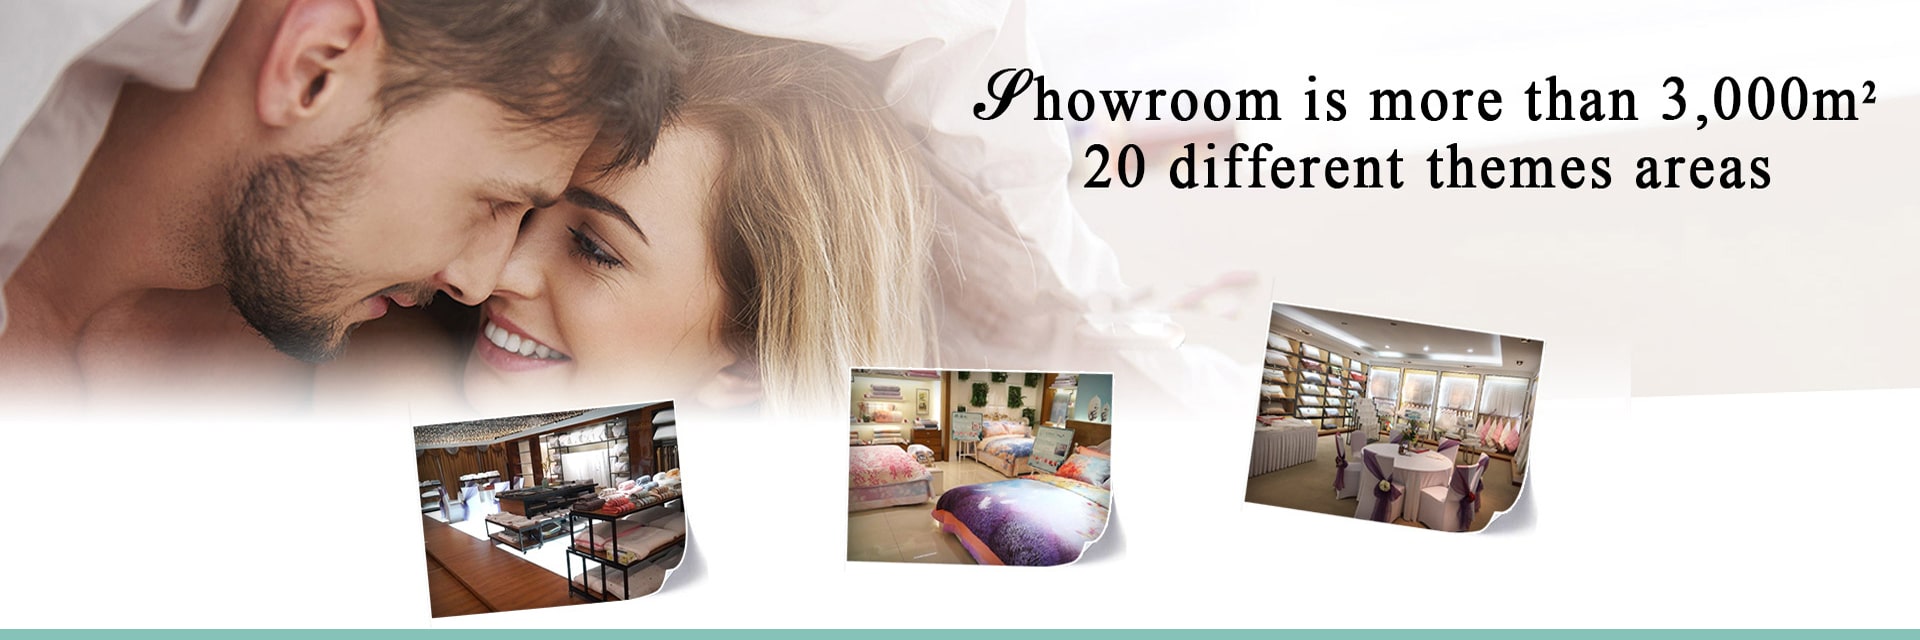 Bedding Showroom 